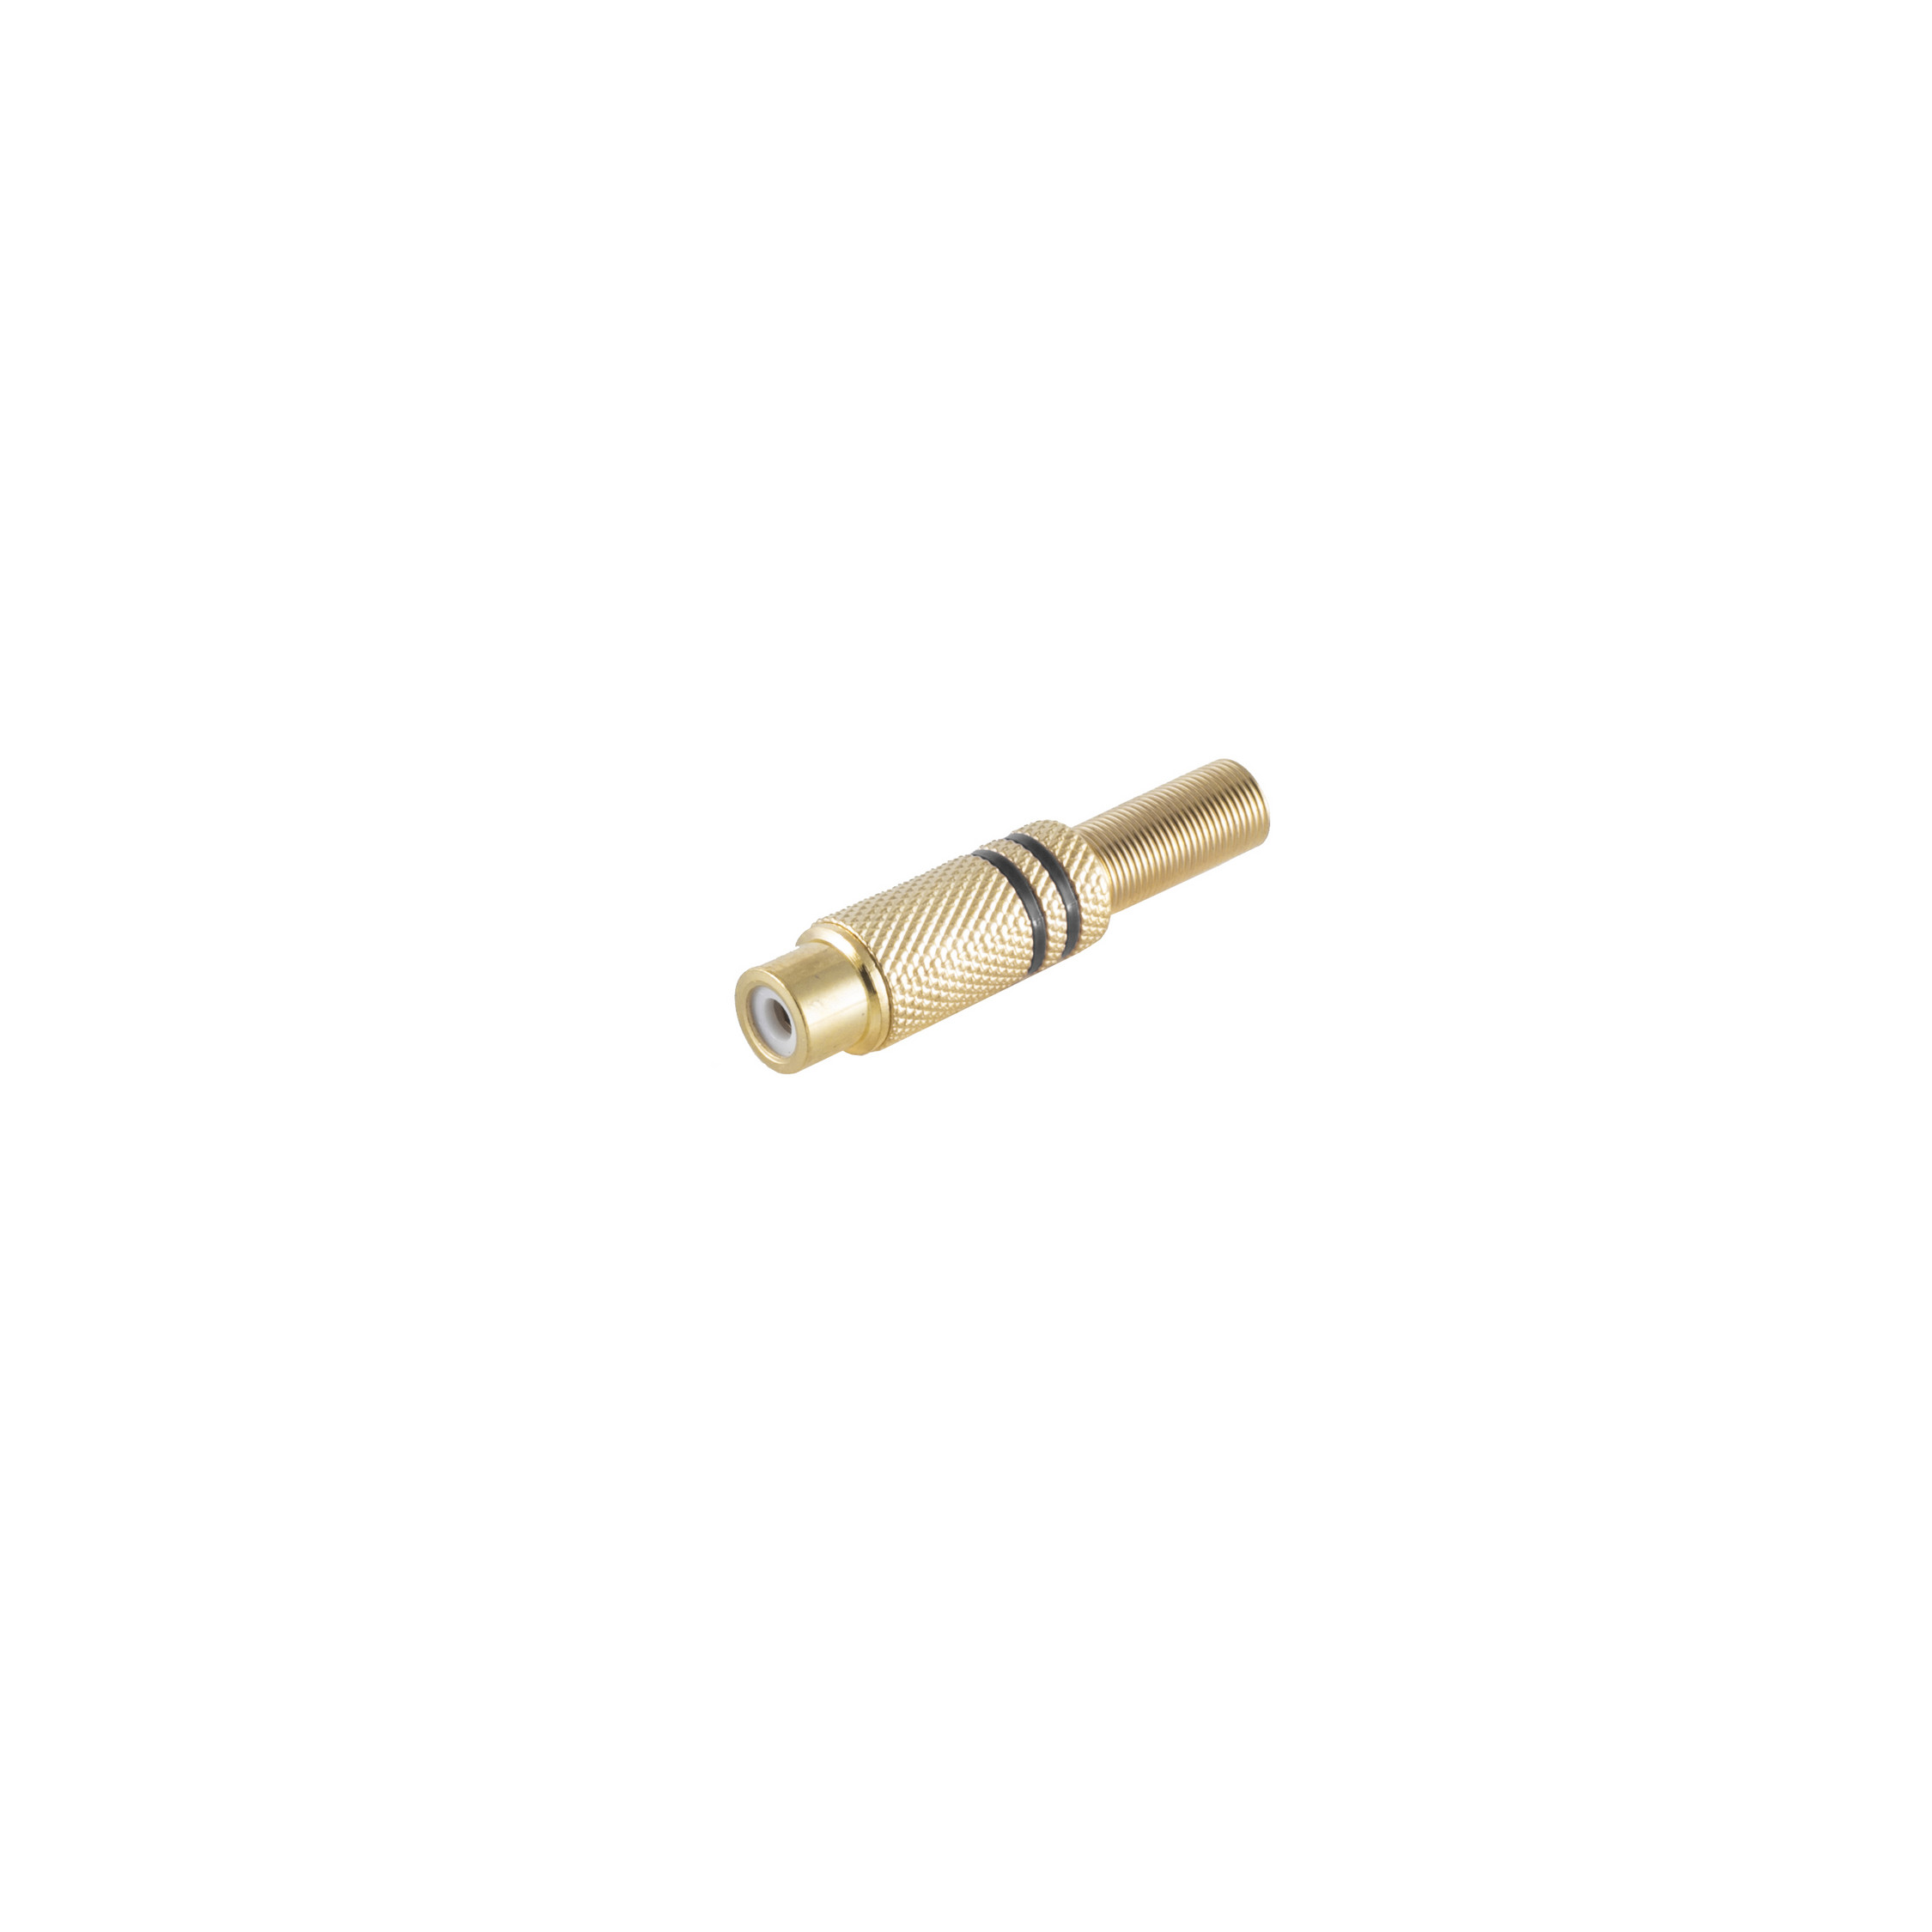 Stecker/ Cinchkupplung vergoldet, Adapter Metall 6mm, SHIVERPEAKS schwarz,